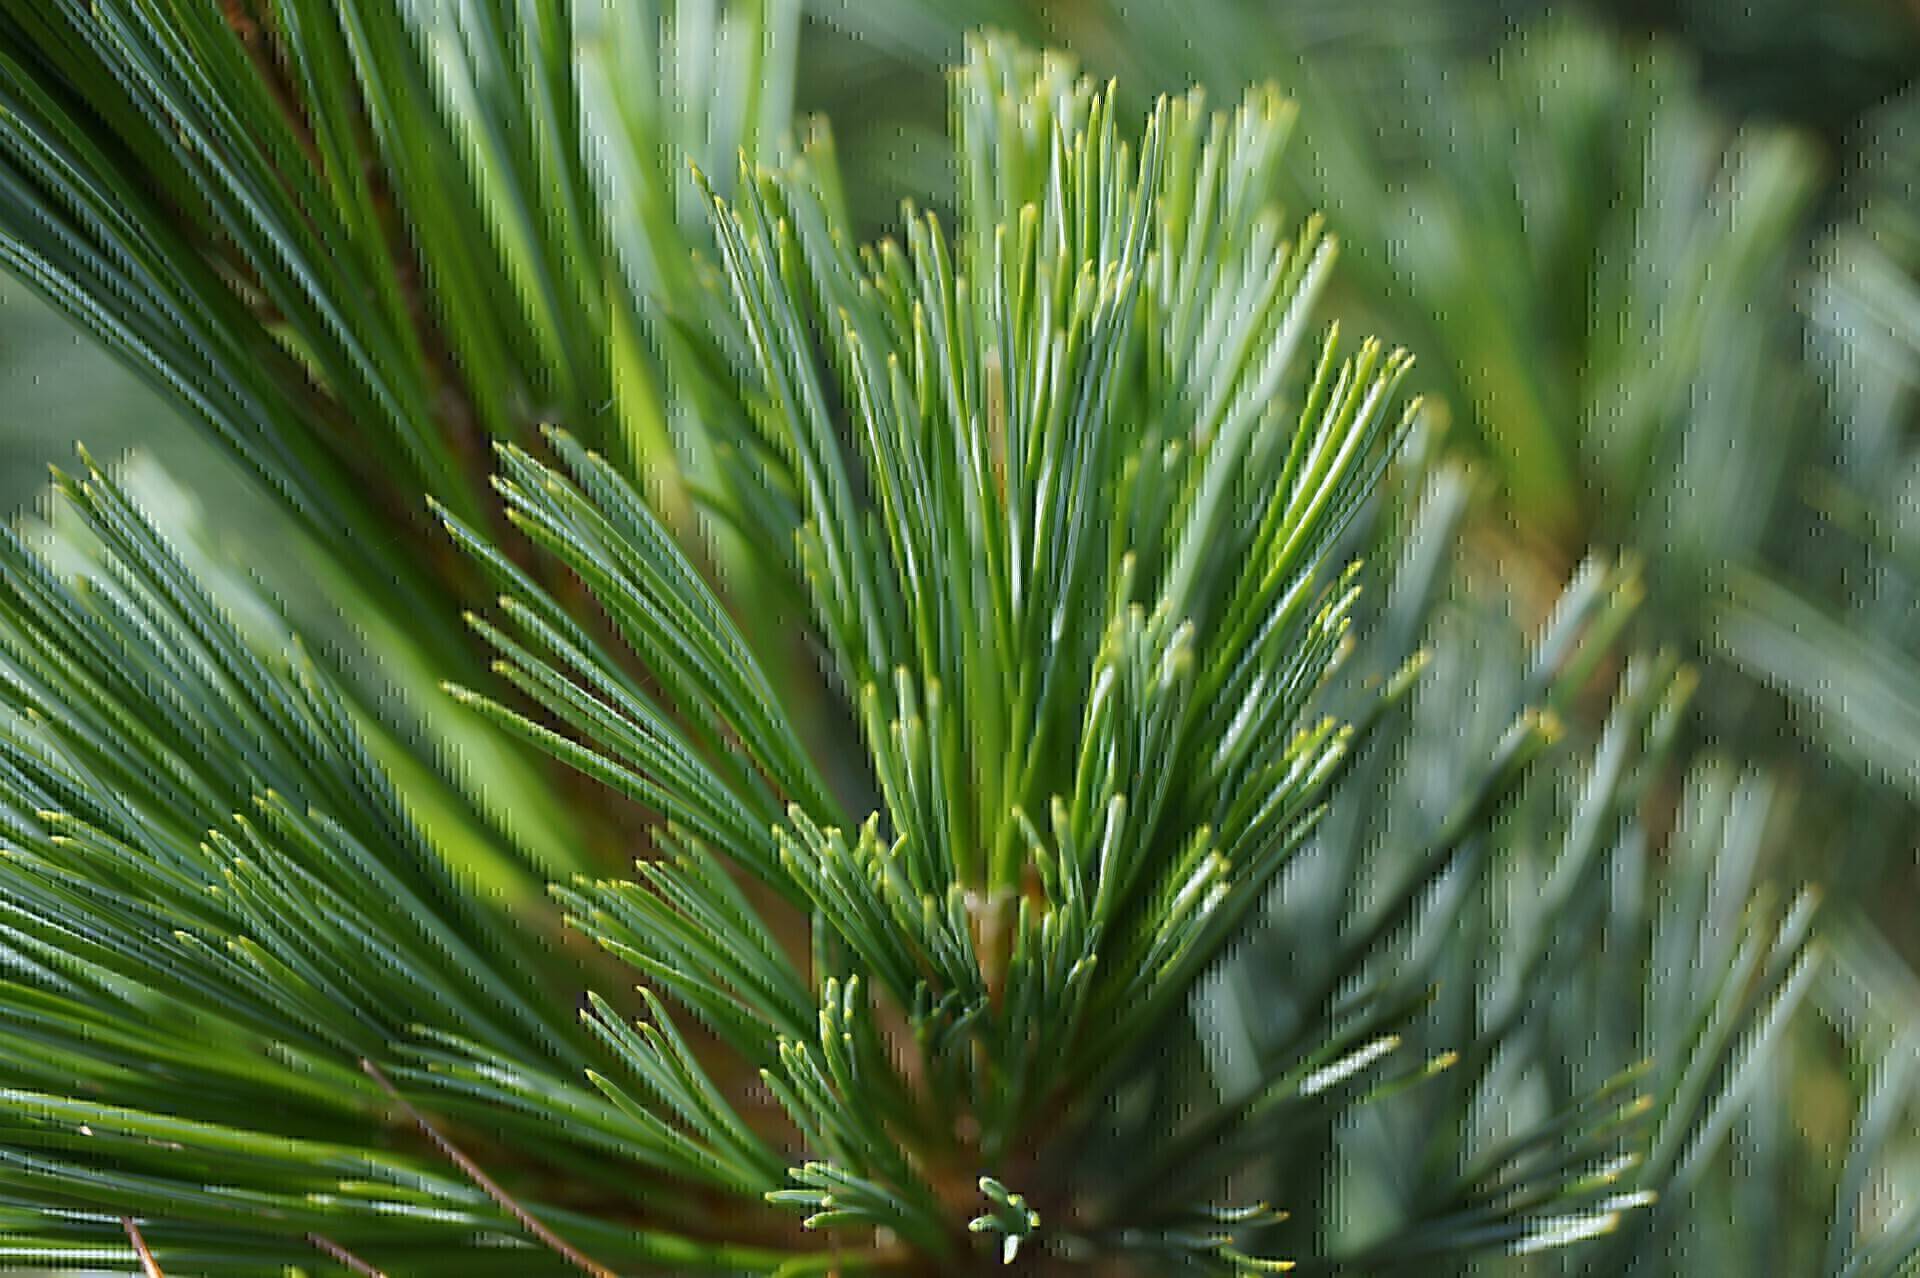 Pinus flexilis Vanderwolf's Pyramid_01